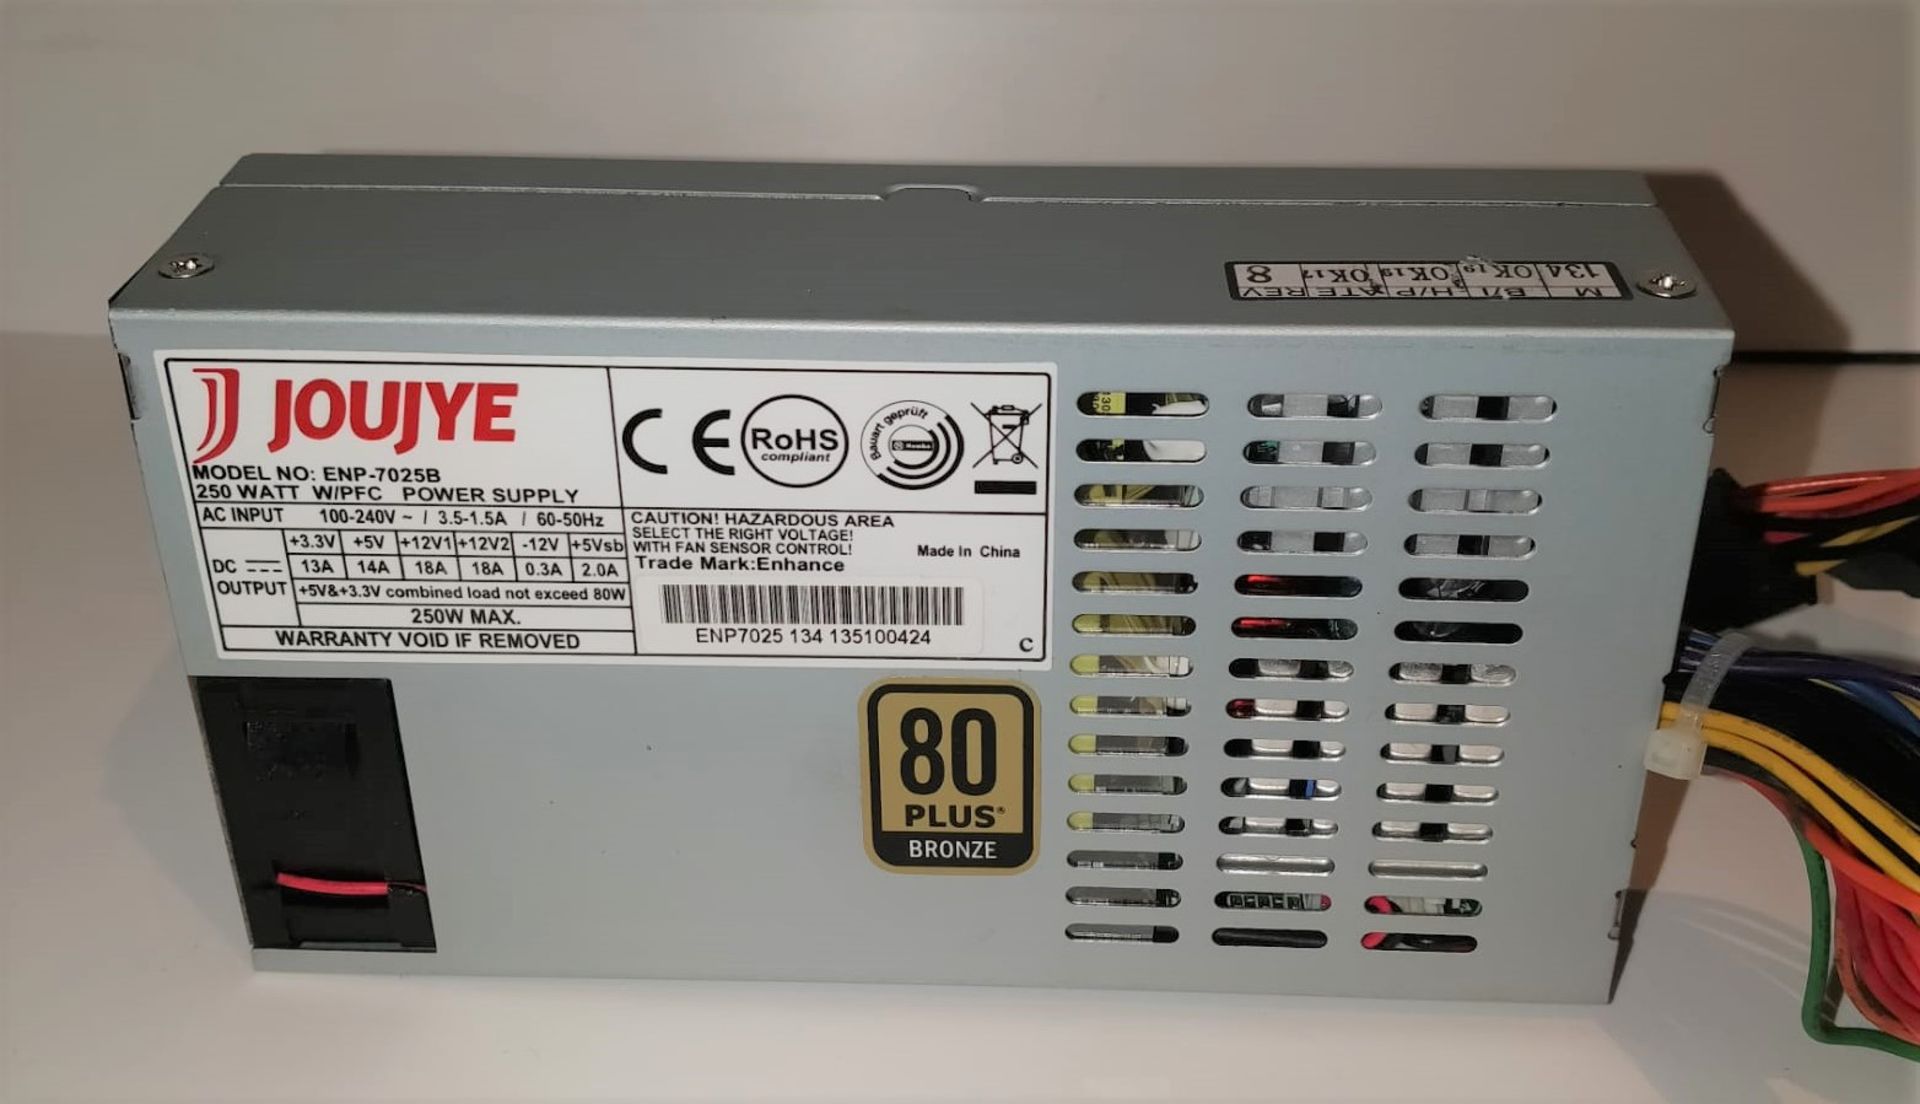 1 x Joujye ENP-7025B 250w Flex ATX Power Supply - Ref: MPC694 CG - CL011 - Location: Altrincham